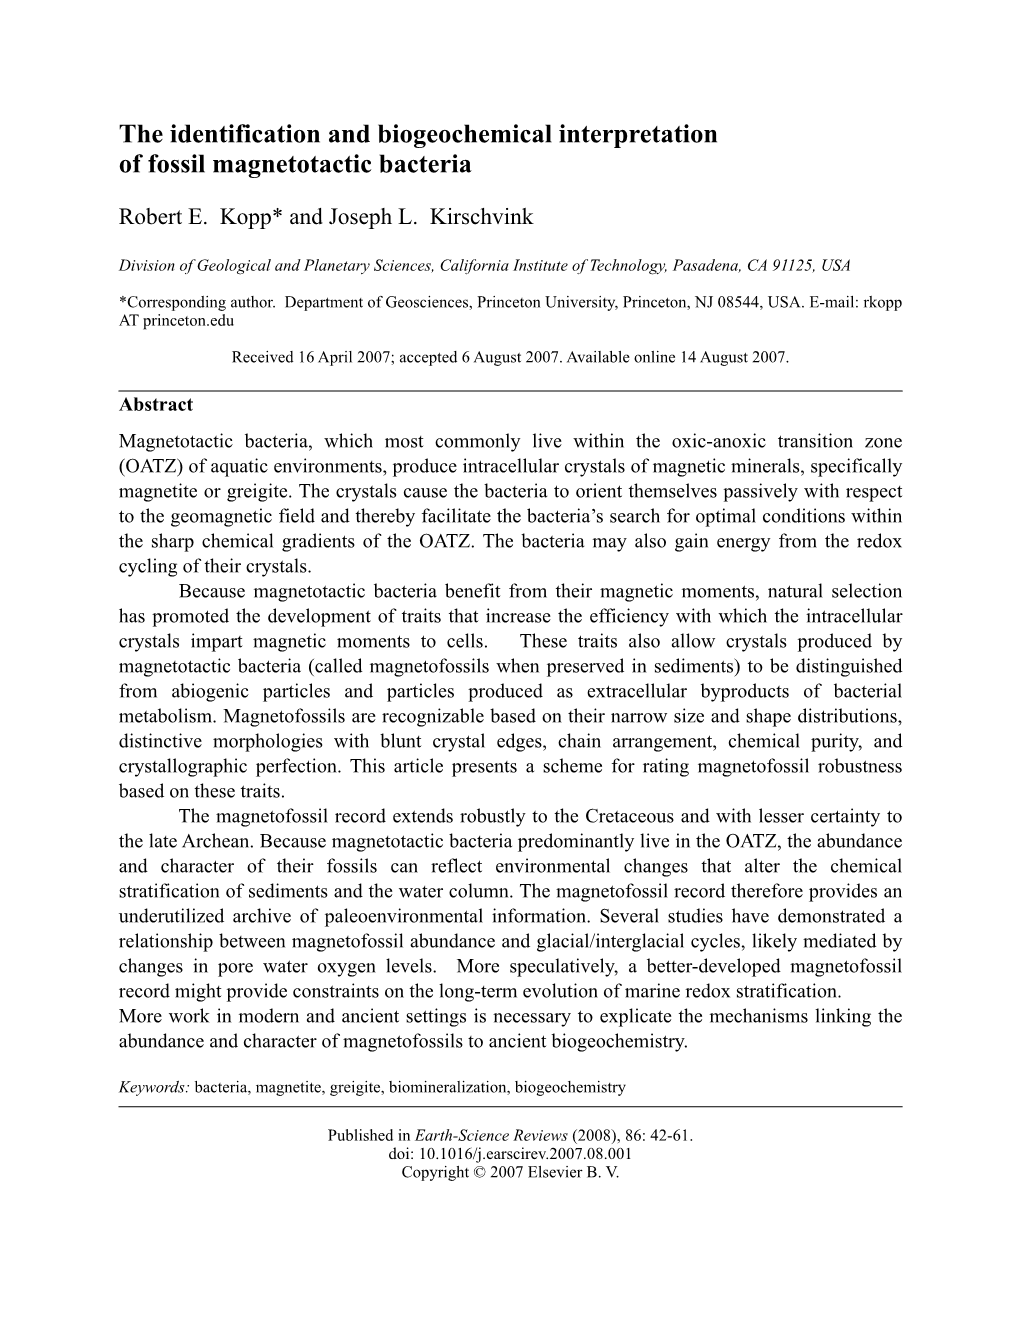 The Identification and Biogeochemical Interpretation of Fossil Magnetotactic Bacteria